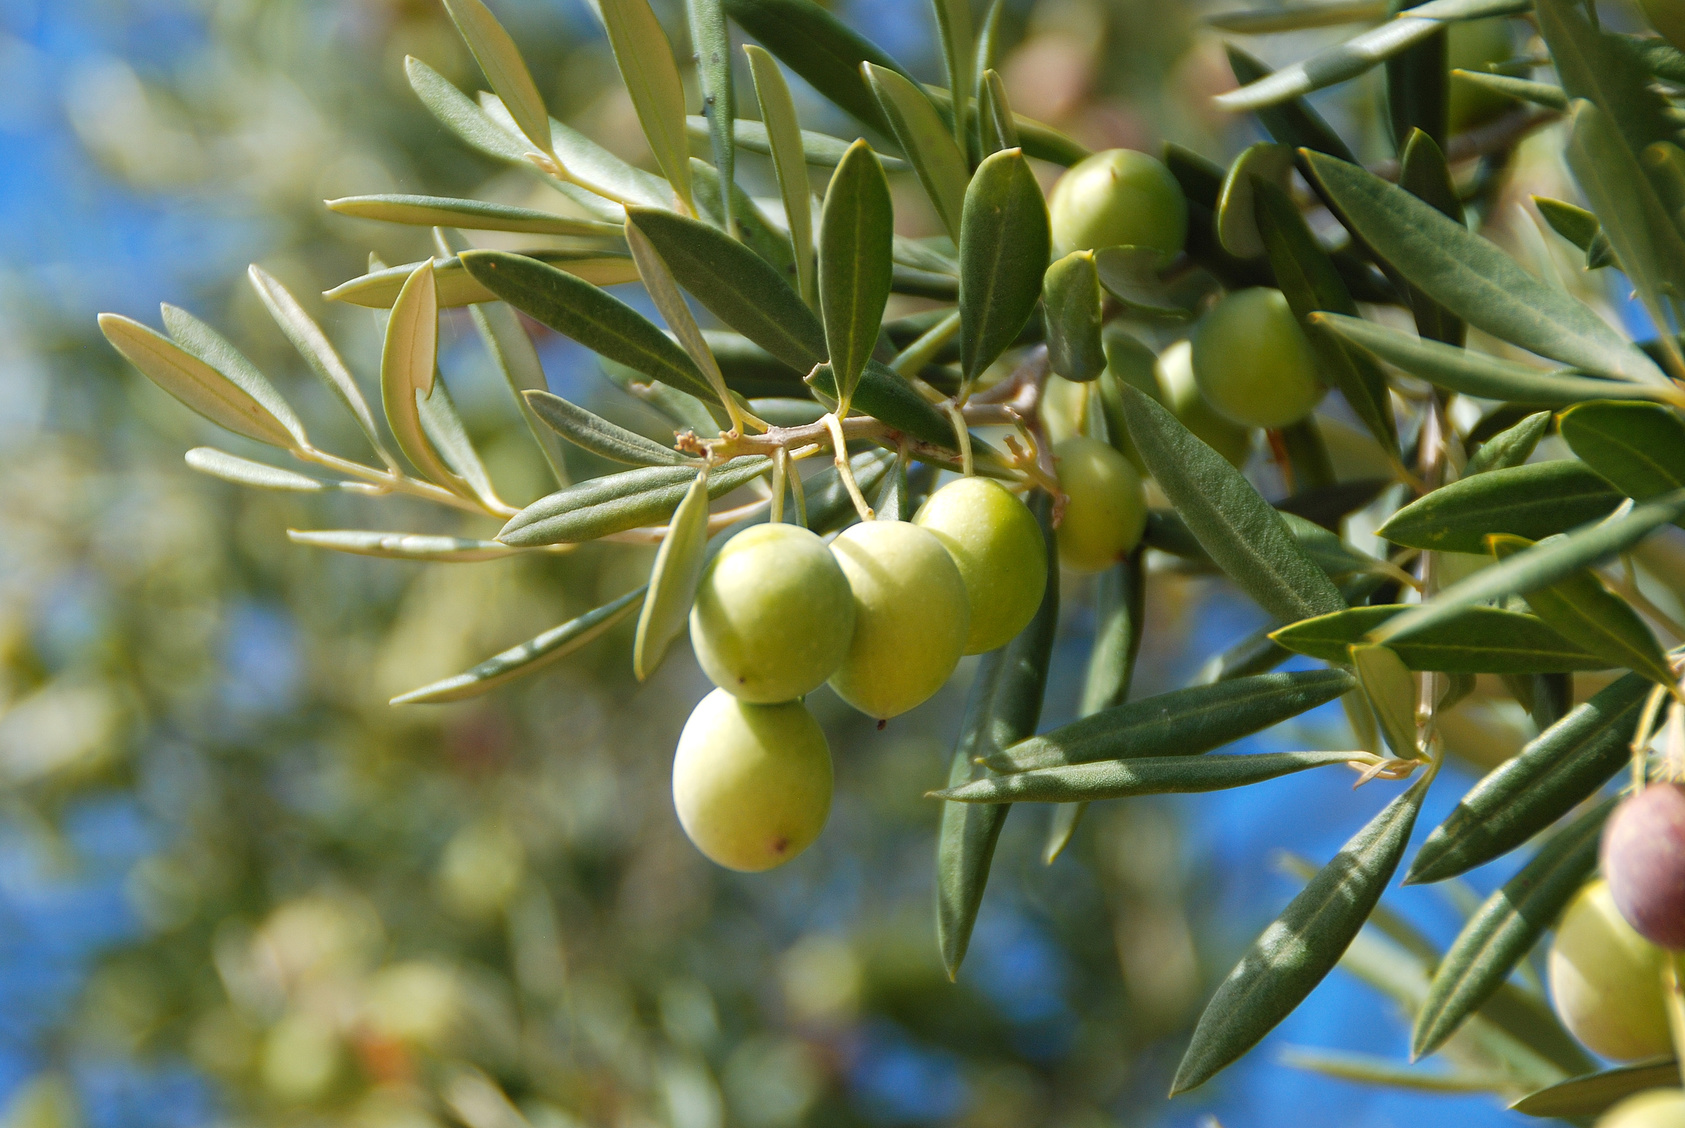 olive leaf immune defenses